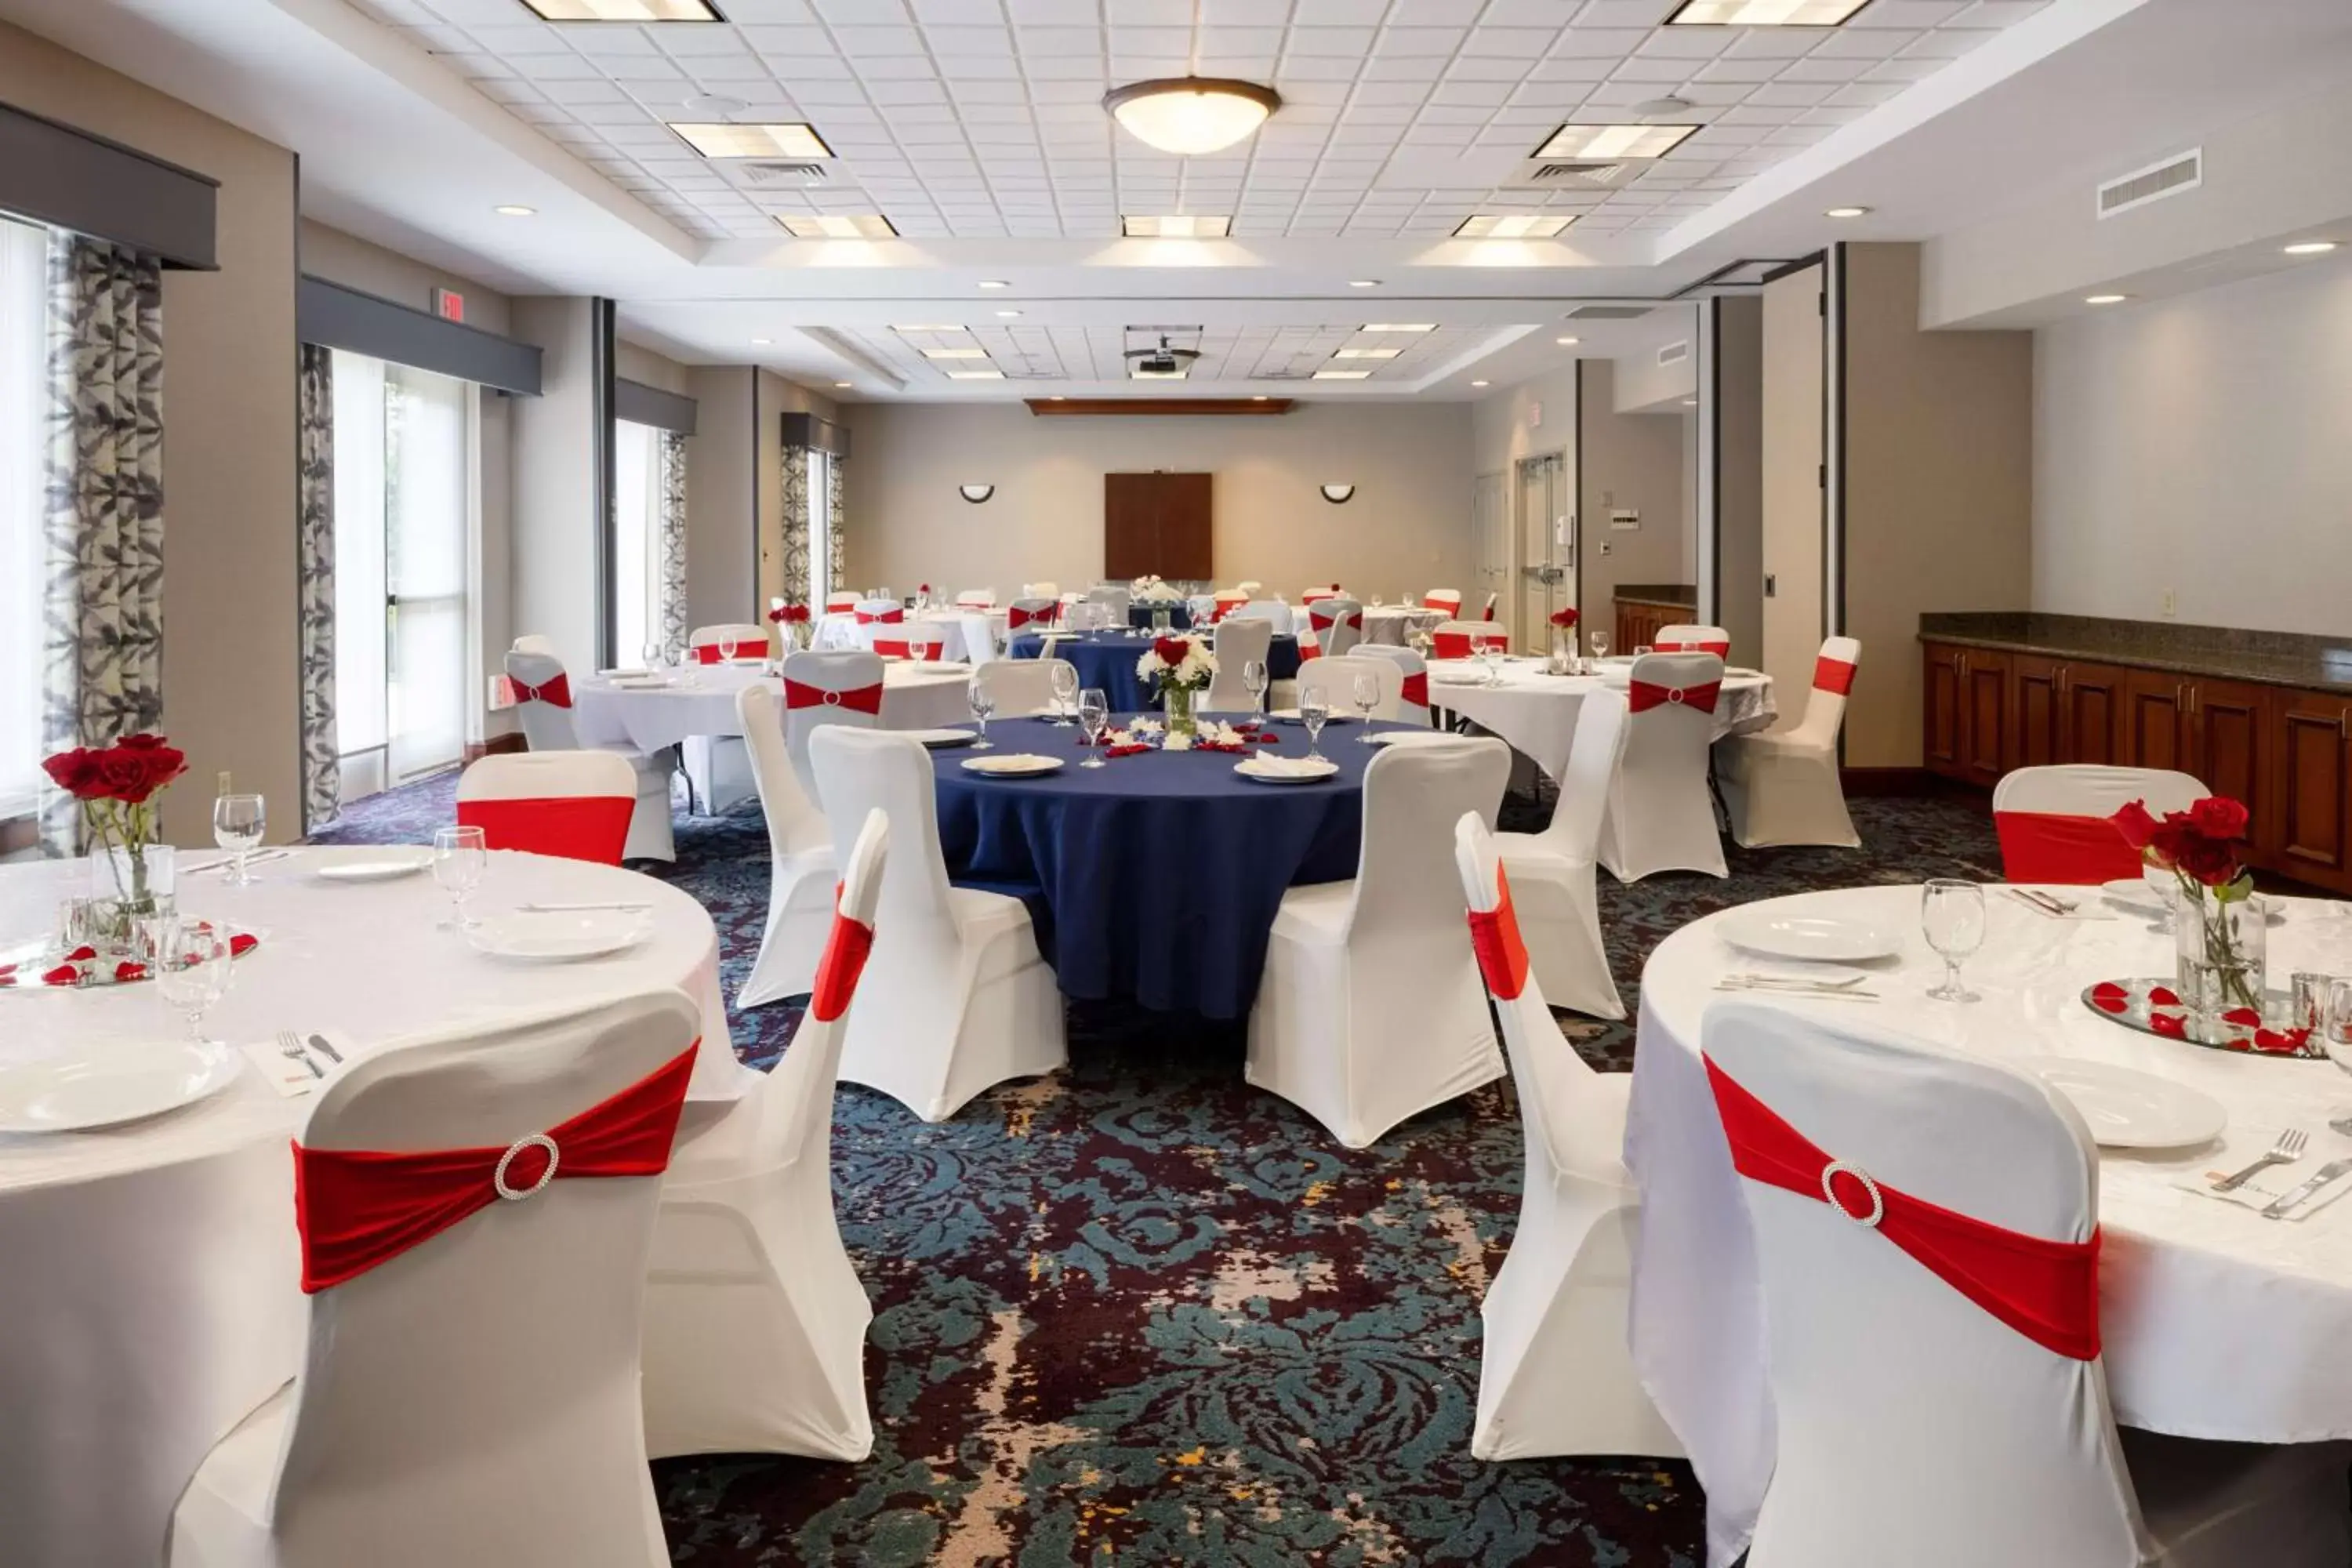 Meeting/conference room, Banquet Facilities in Hilton Garden Inn Mystic/Groton